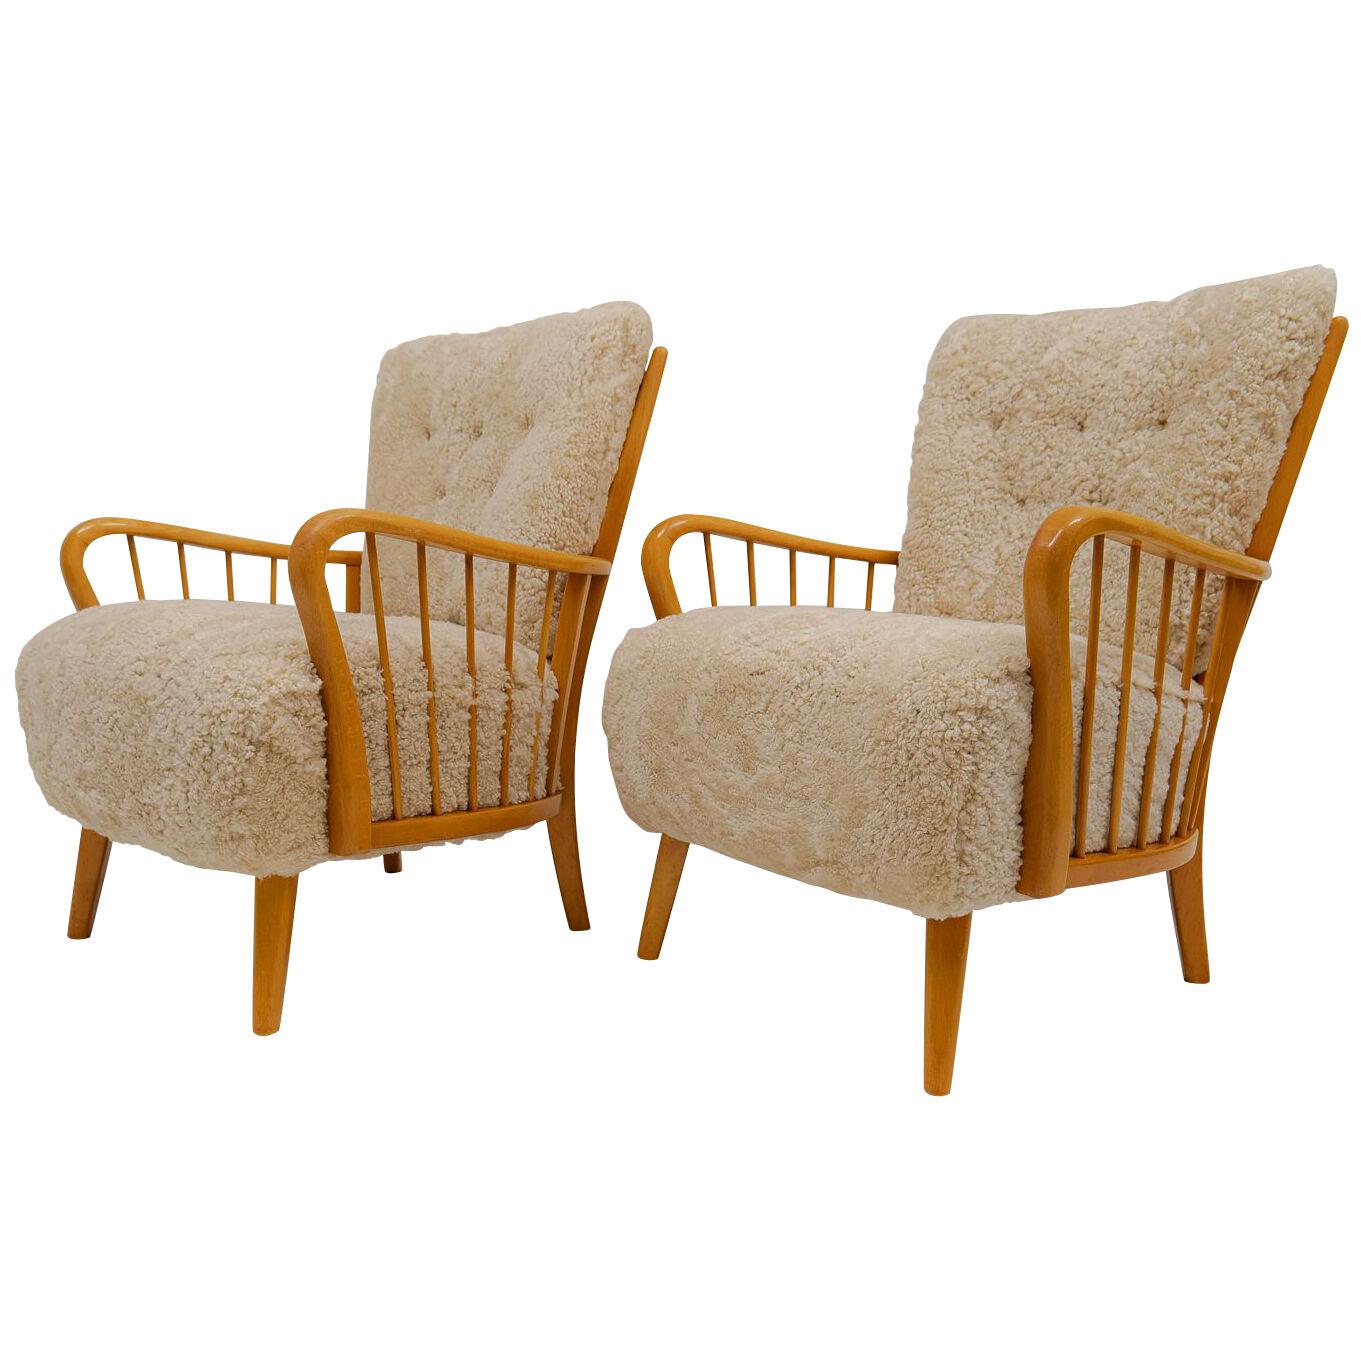 Art Deco Swedish Grace Lounge Chairs in Shearling / Sheepskin 1940s Sweden